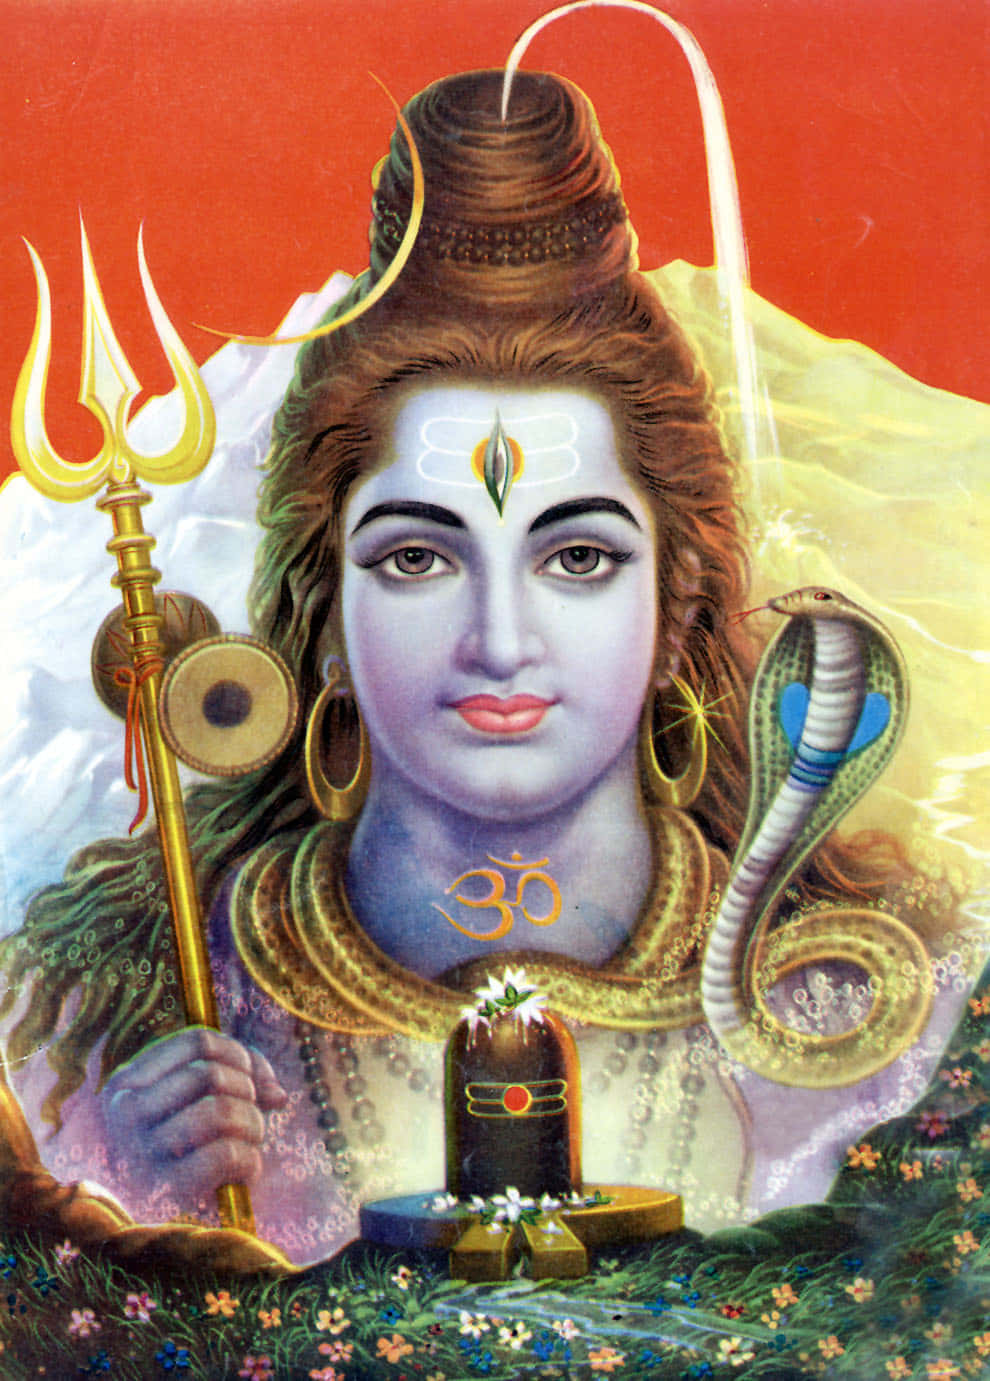 Shiva the Hindu God of Destruction and Transformation